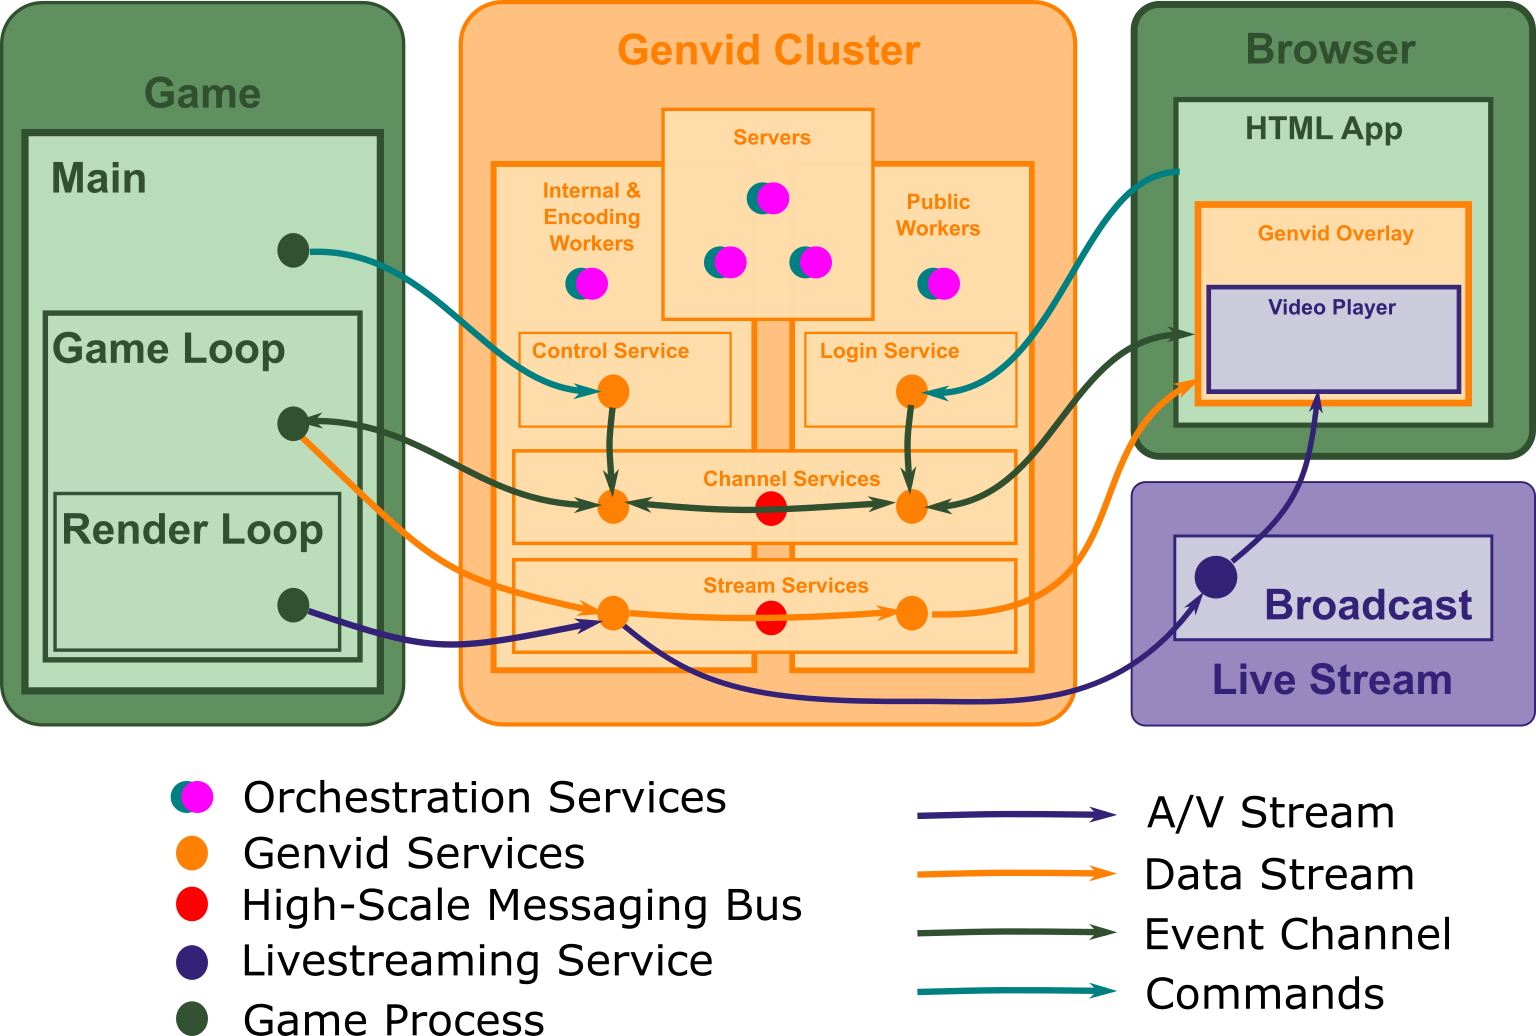 Genvid Service Cluster